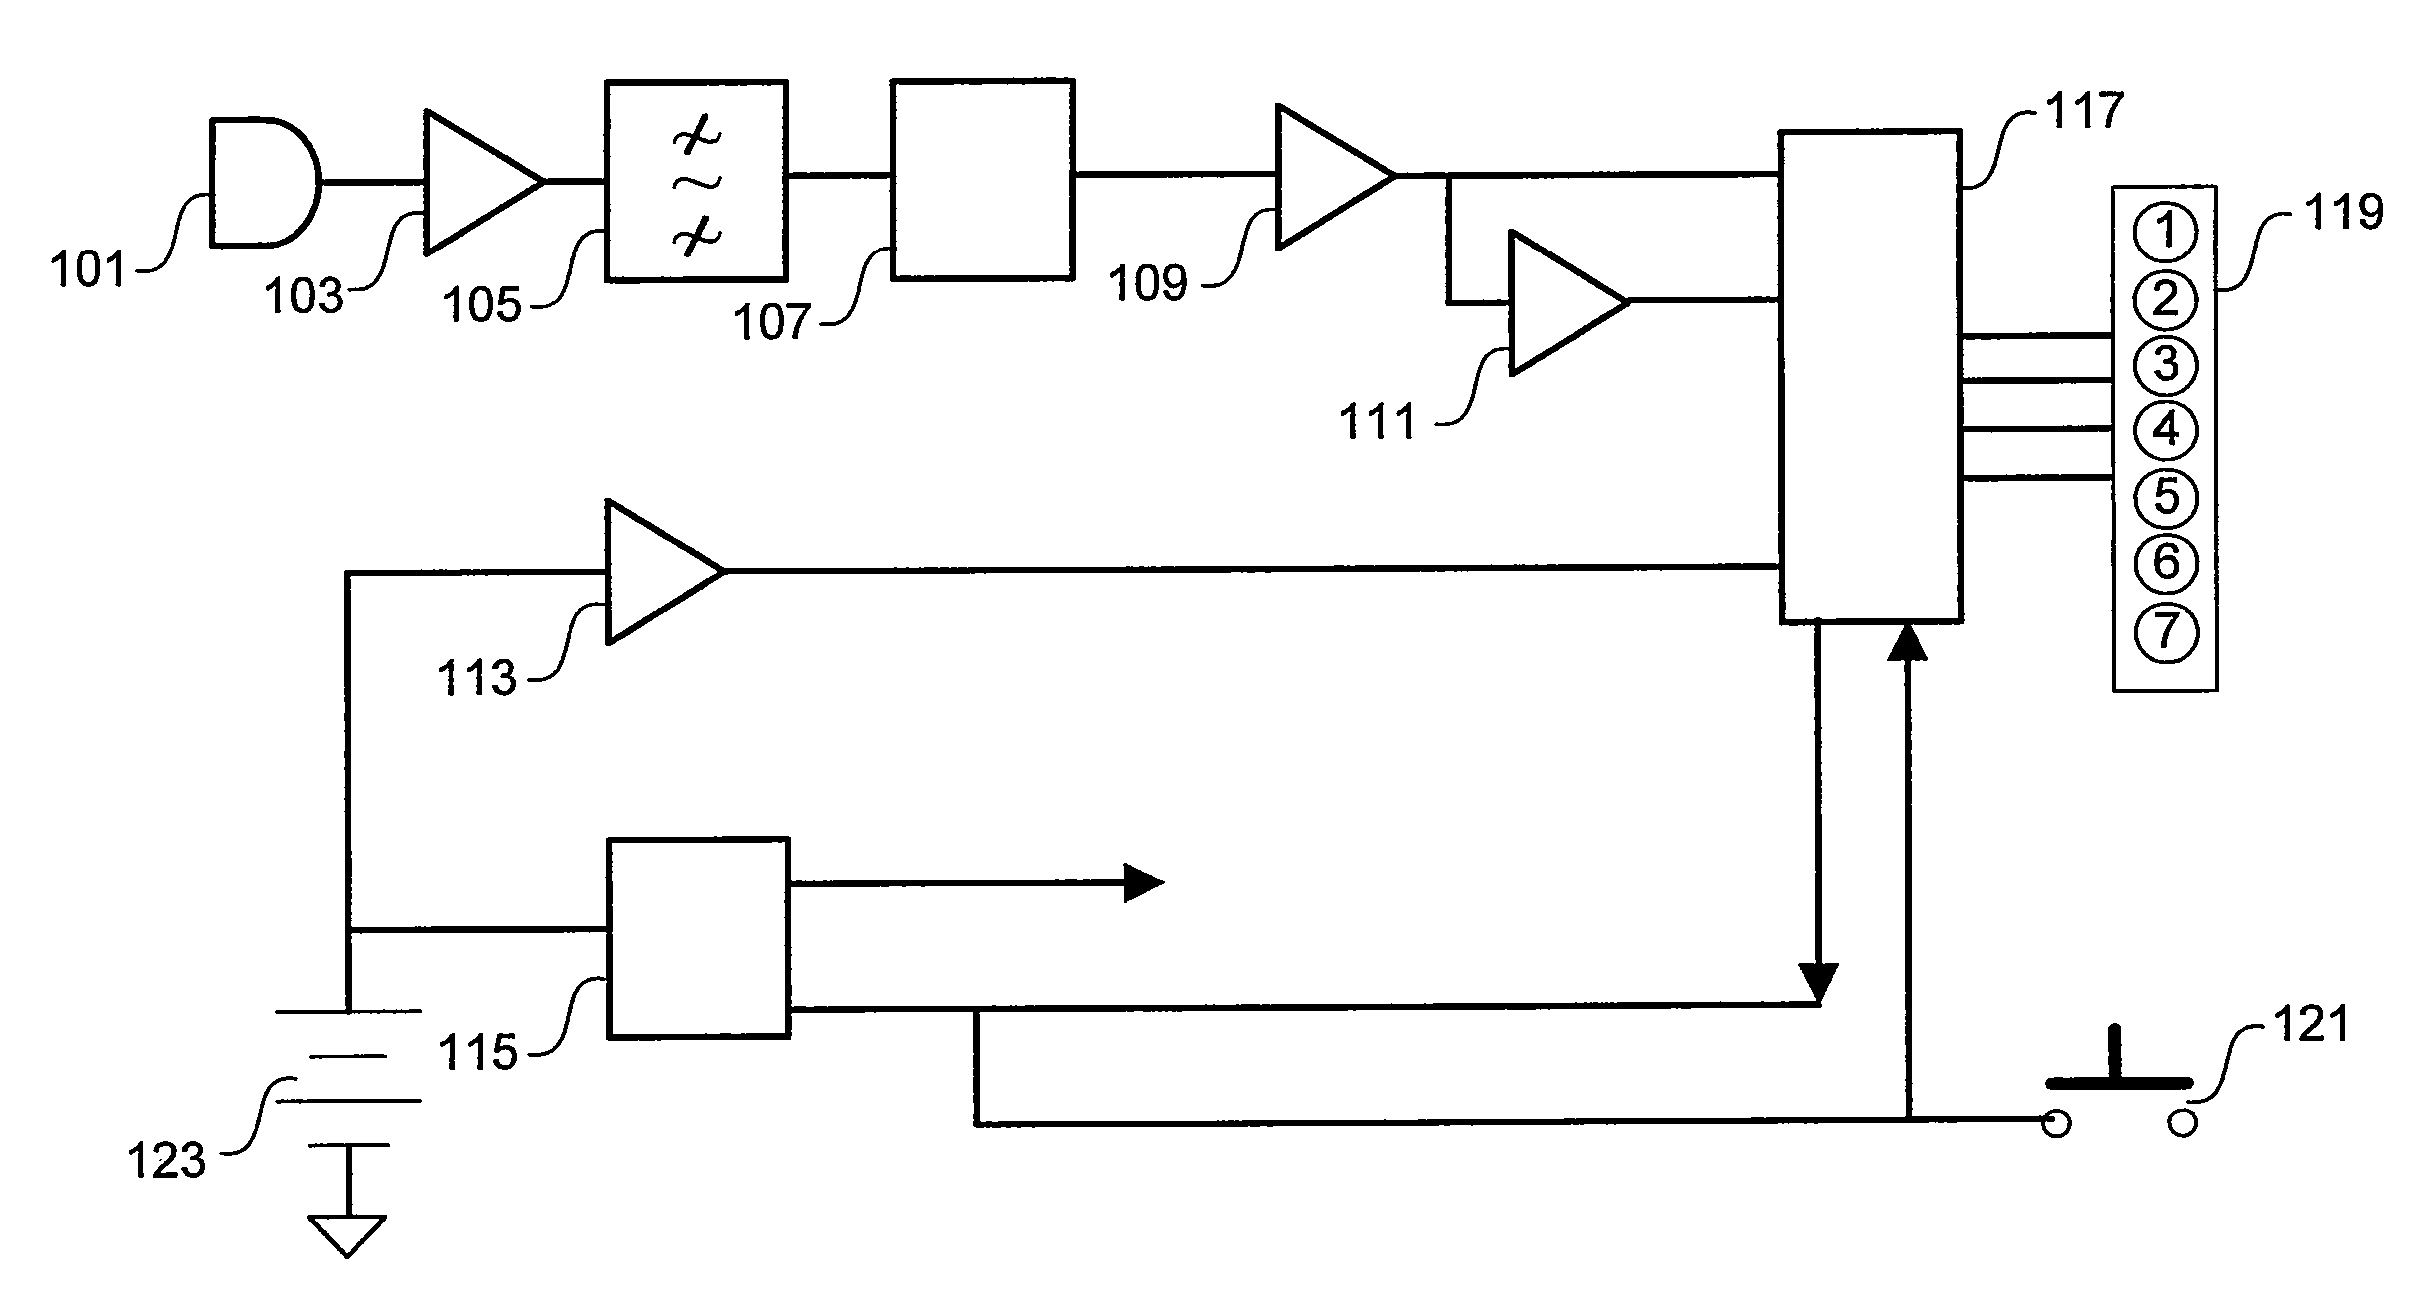 Method and system for noise dosimeter